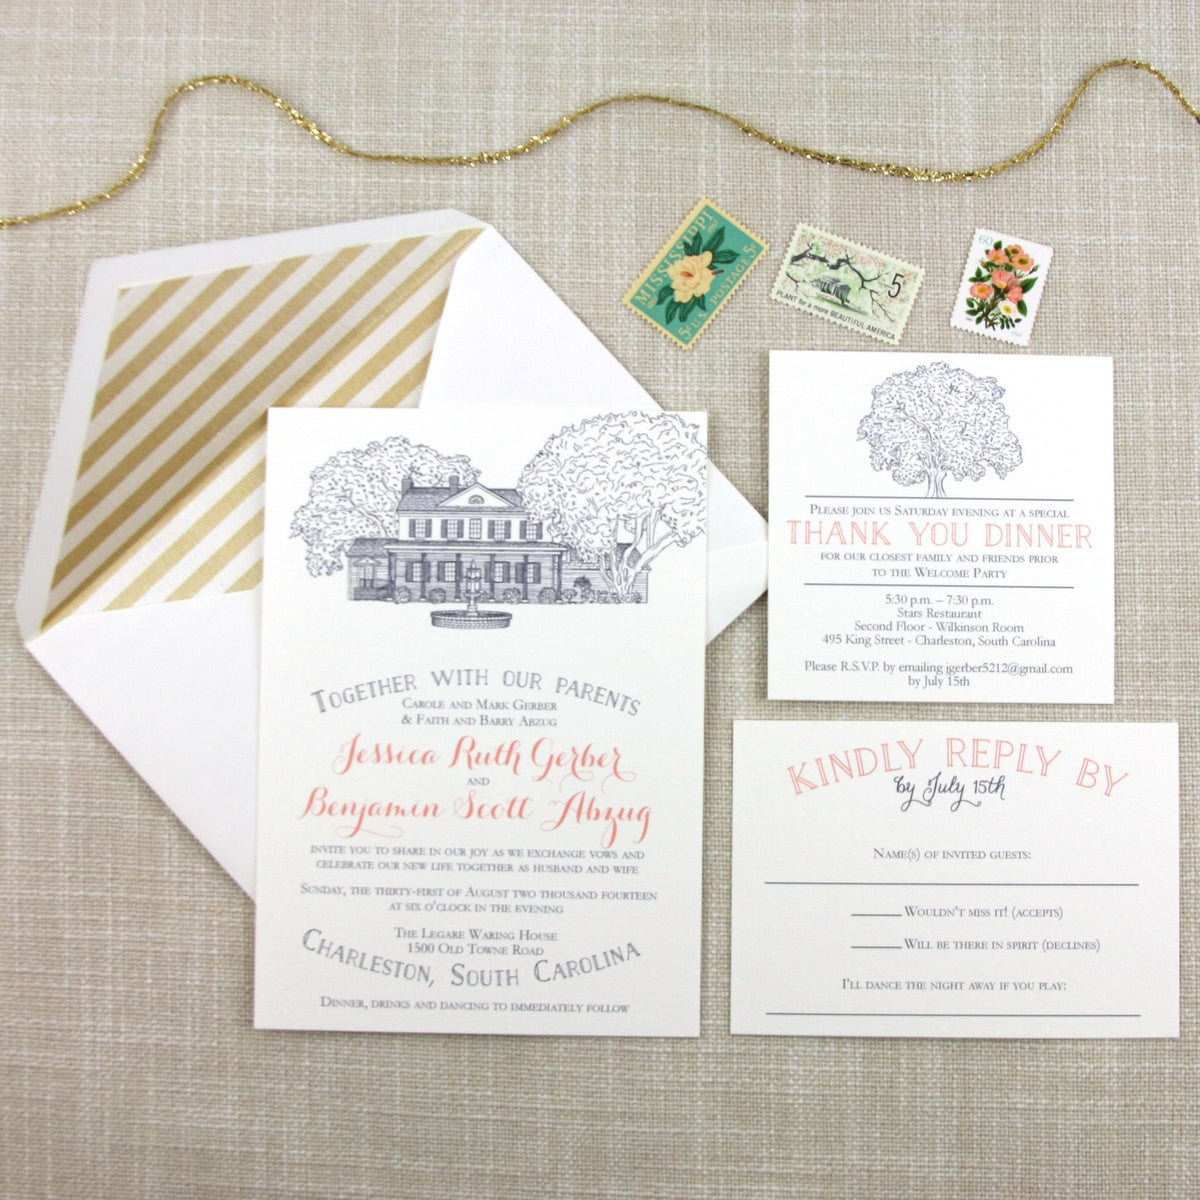 Legare Waring House Wedding Invitation in Charleston, SC by Scotti Cline Designs